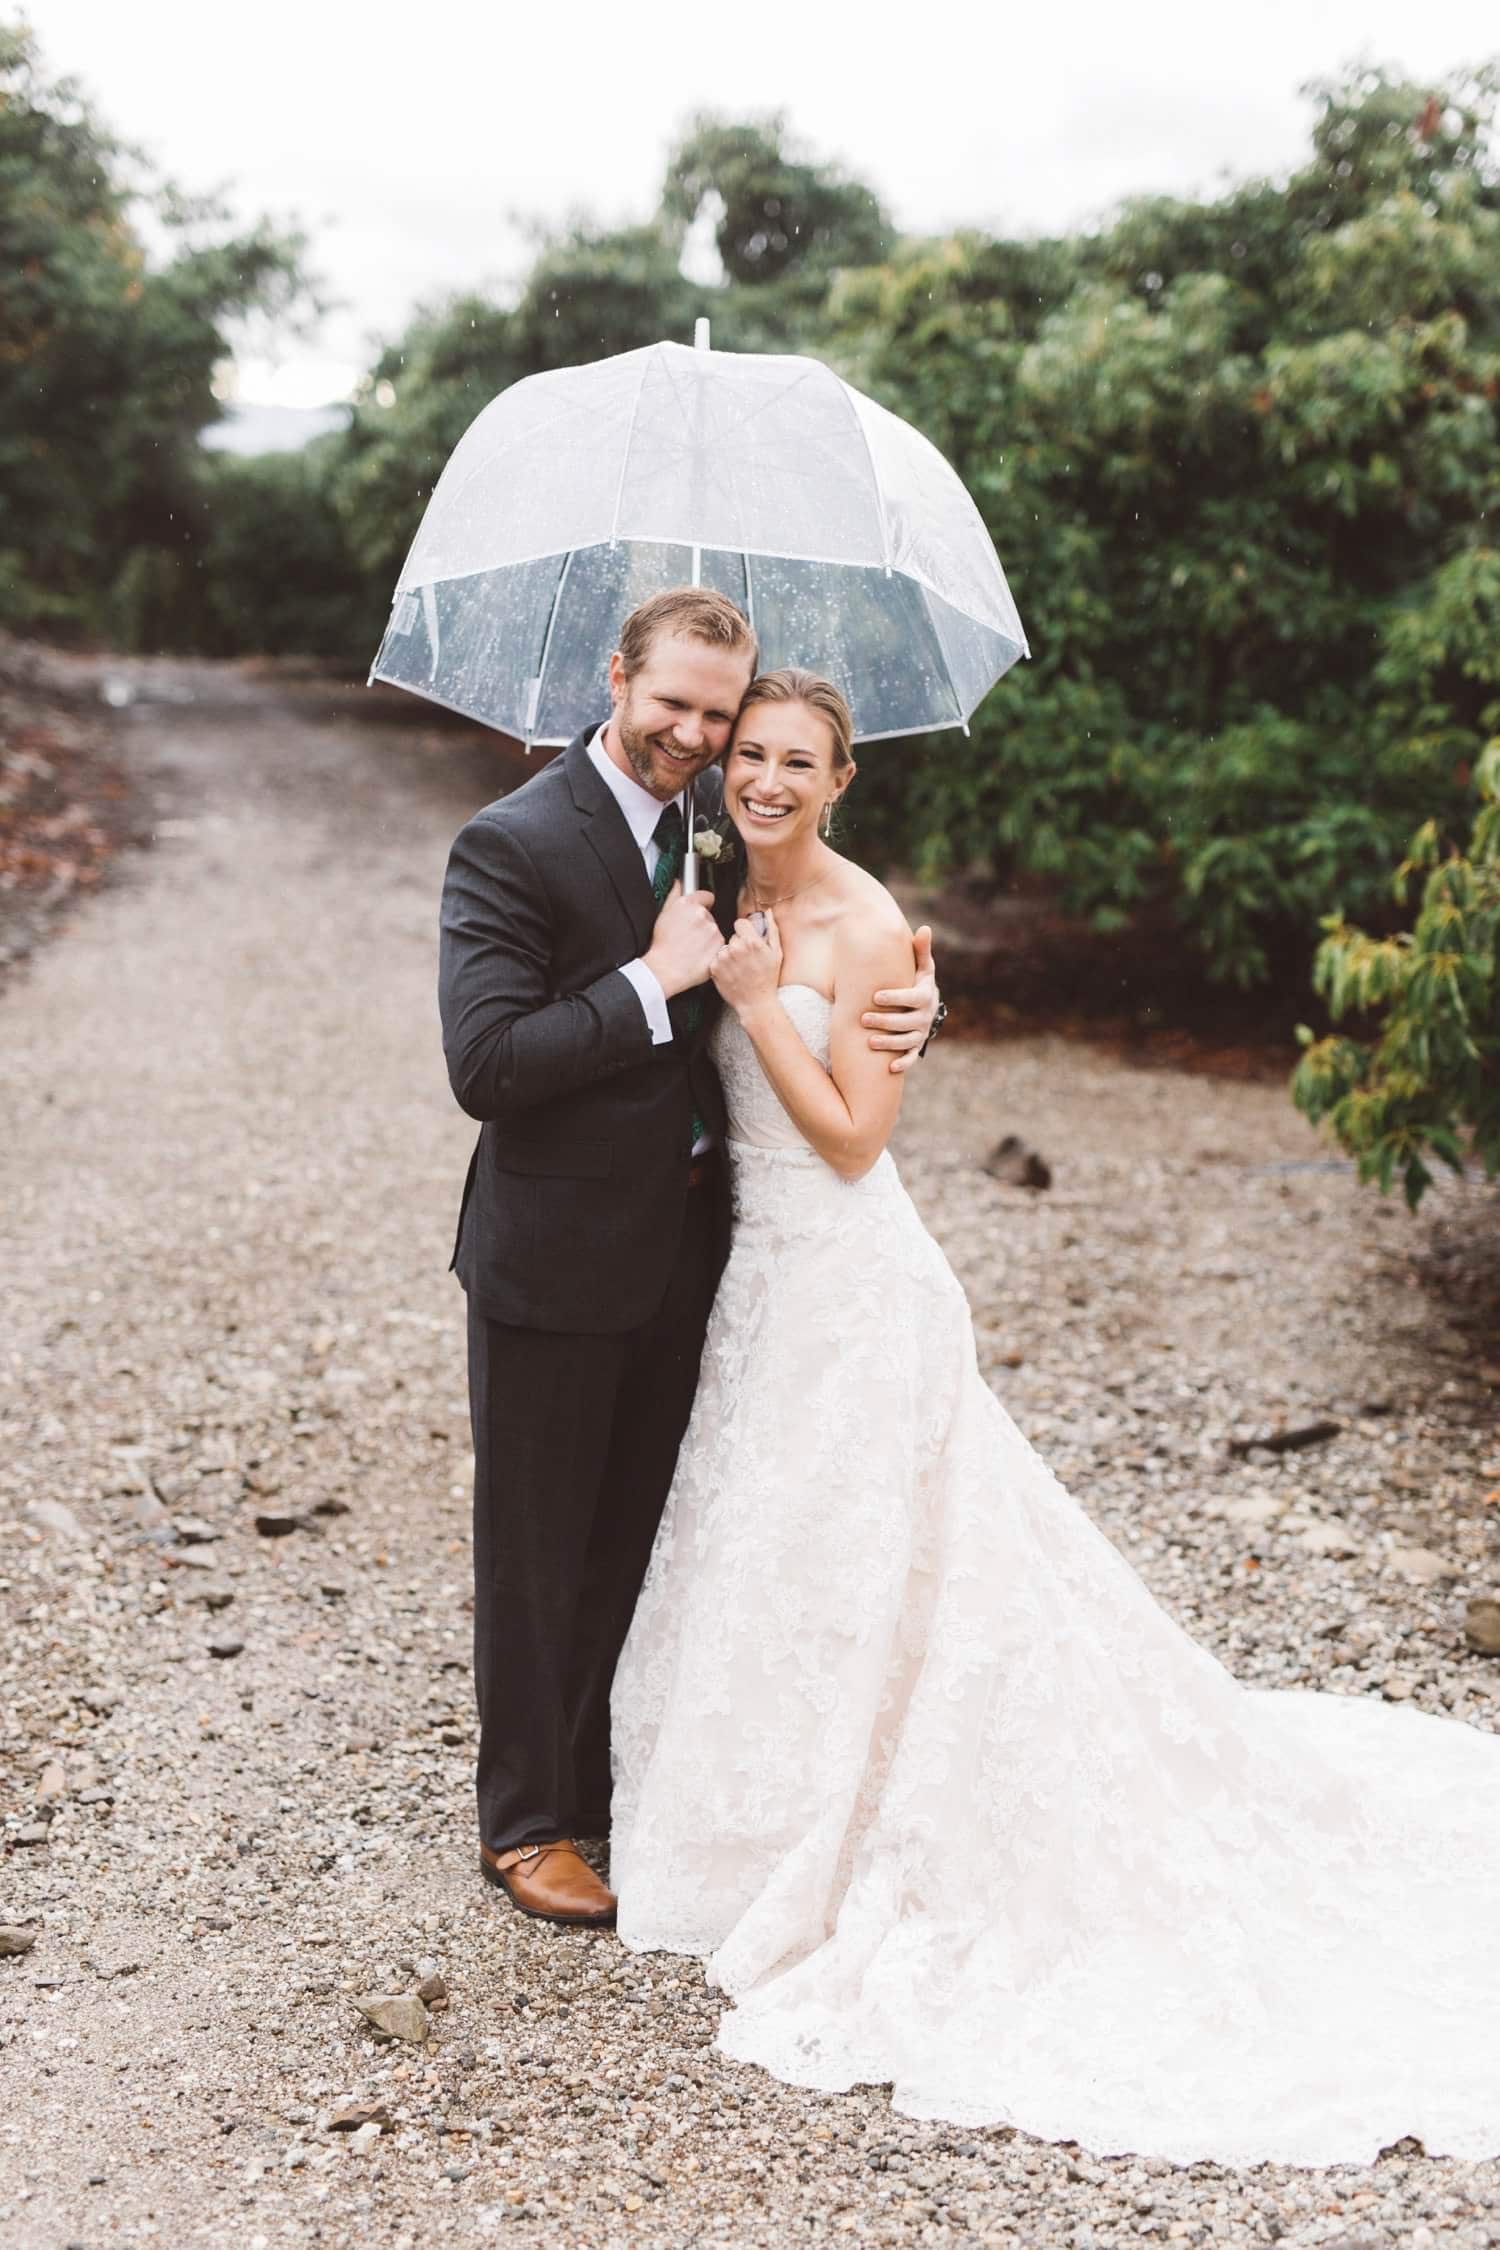 rainy day wedding